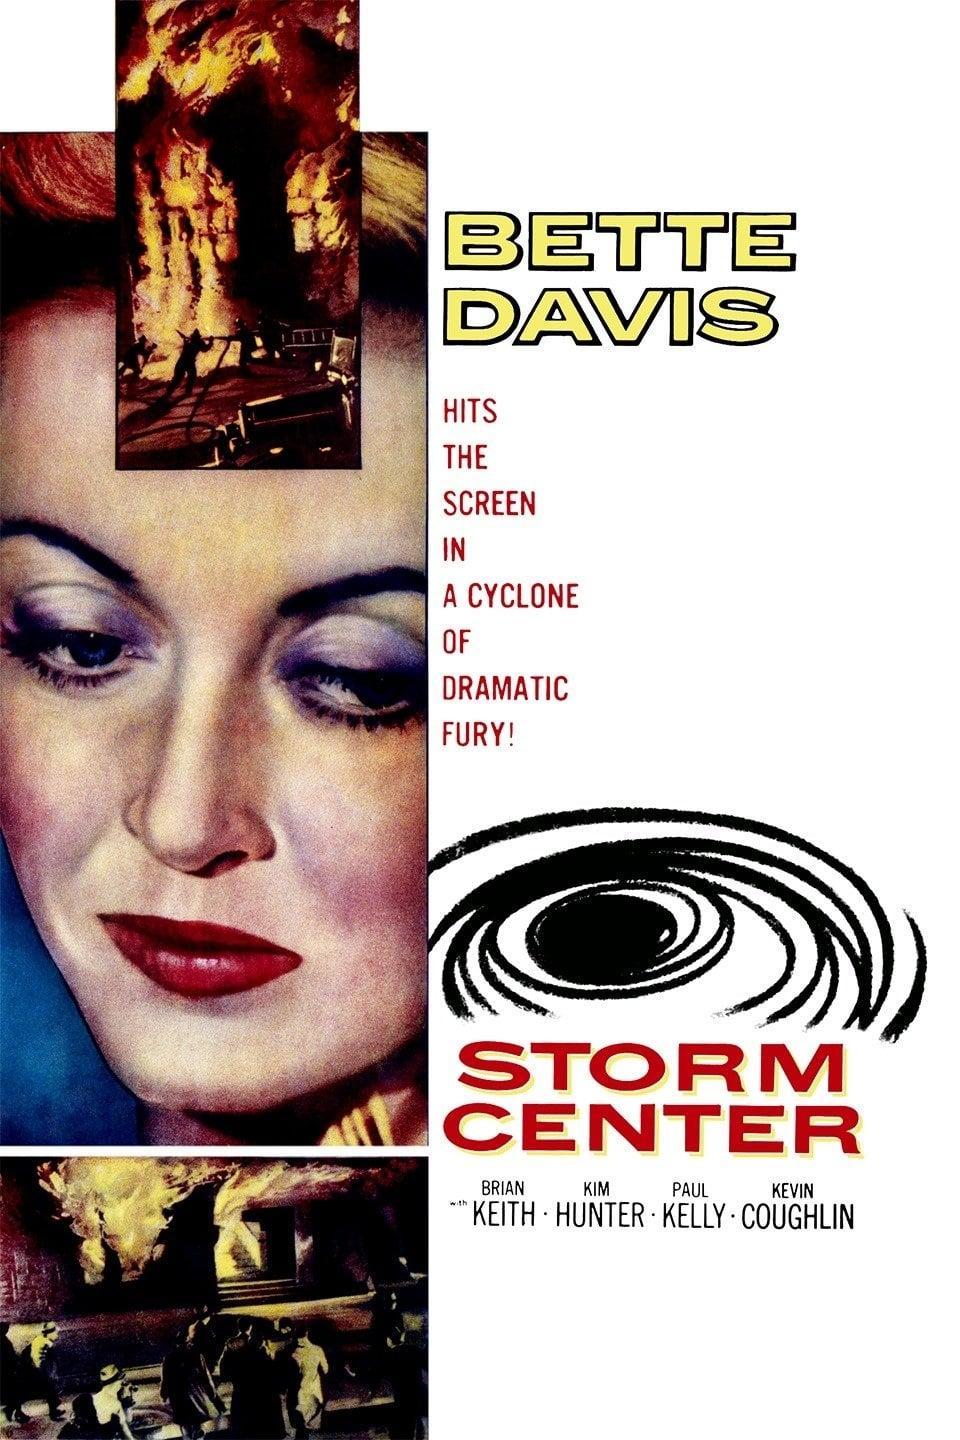 Storm Center poster